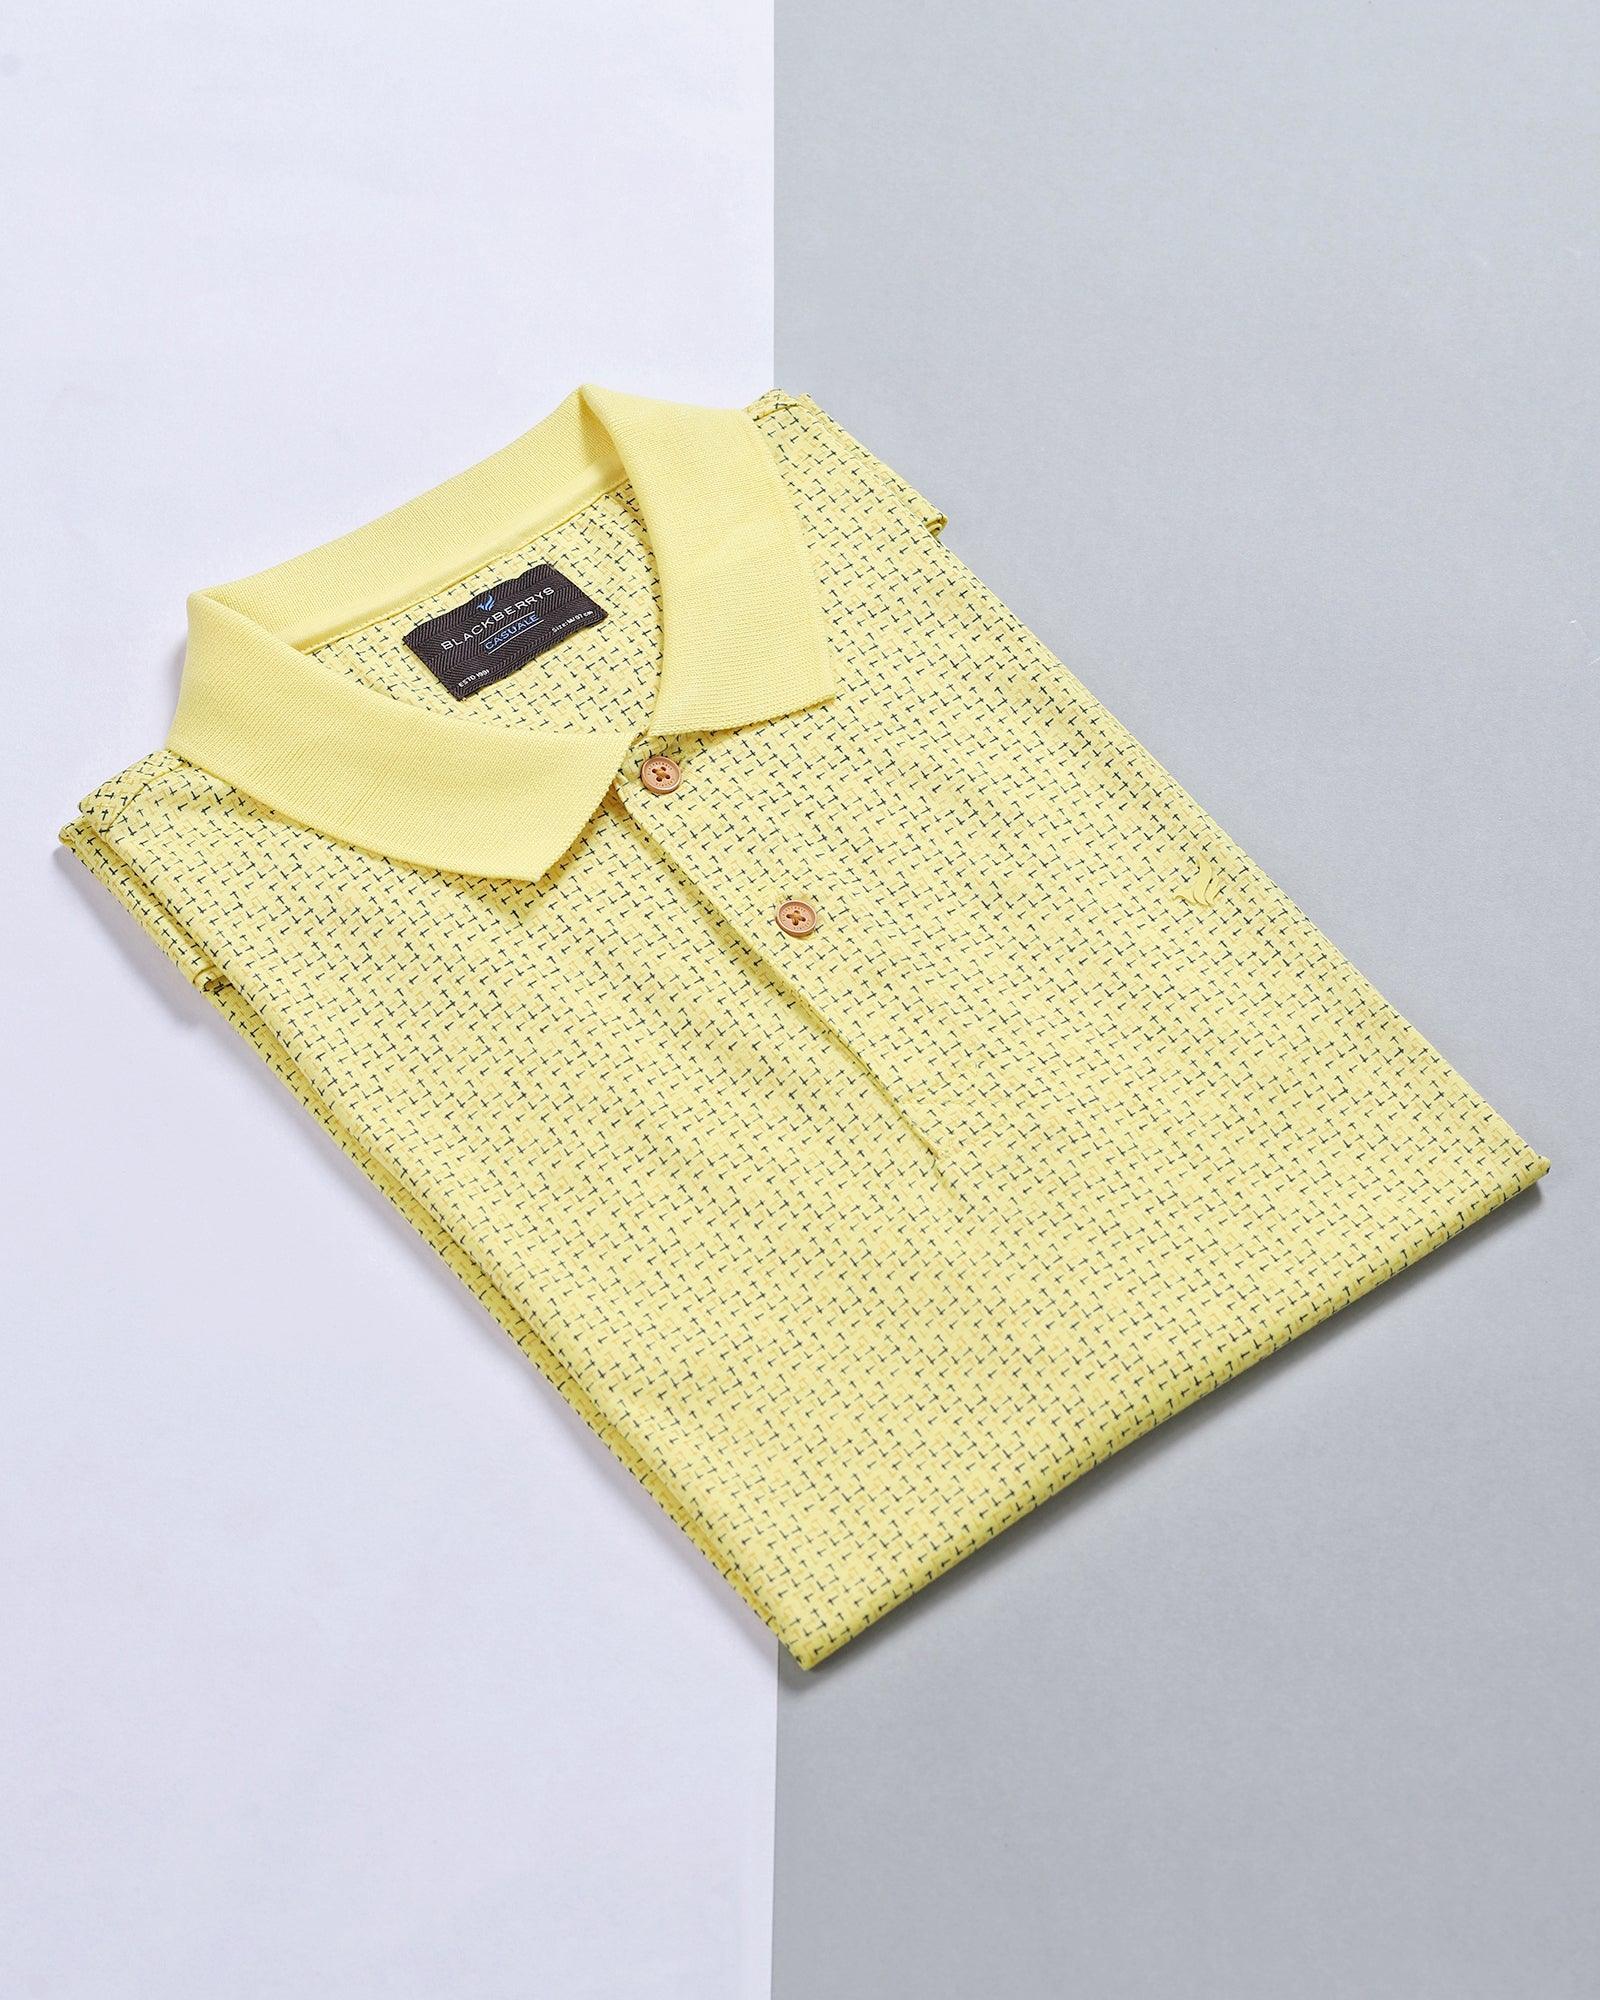 Polo Bright Yellow Printed T Shirt - Melvin